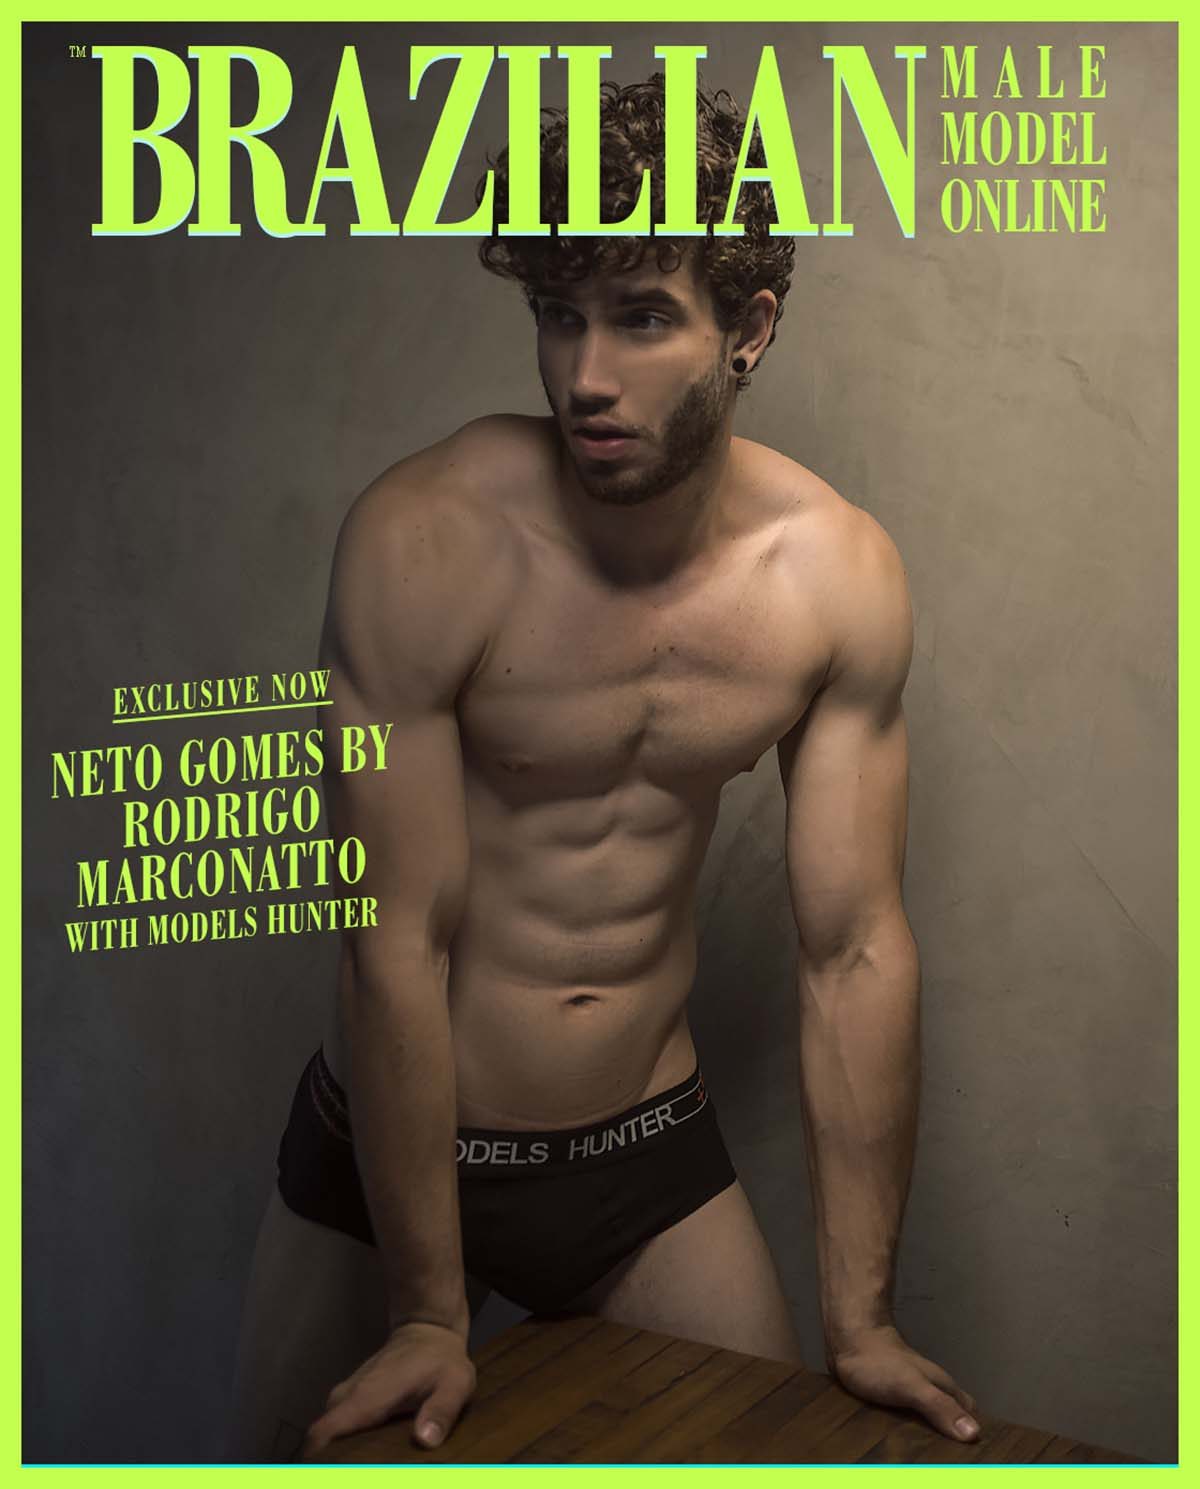 Neto Gomes by Rodrigo Marconatto with Models Hunter